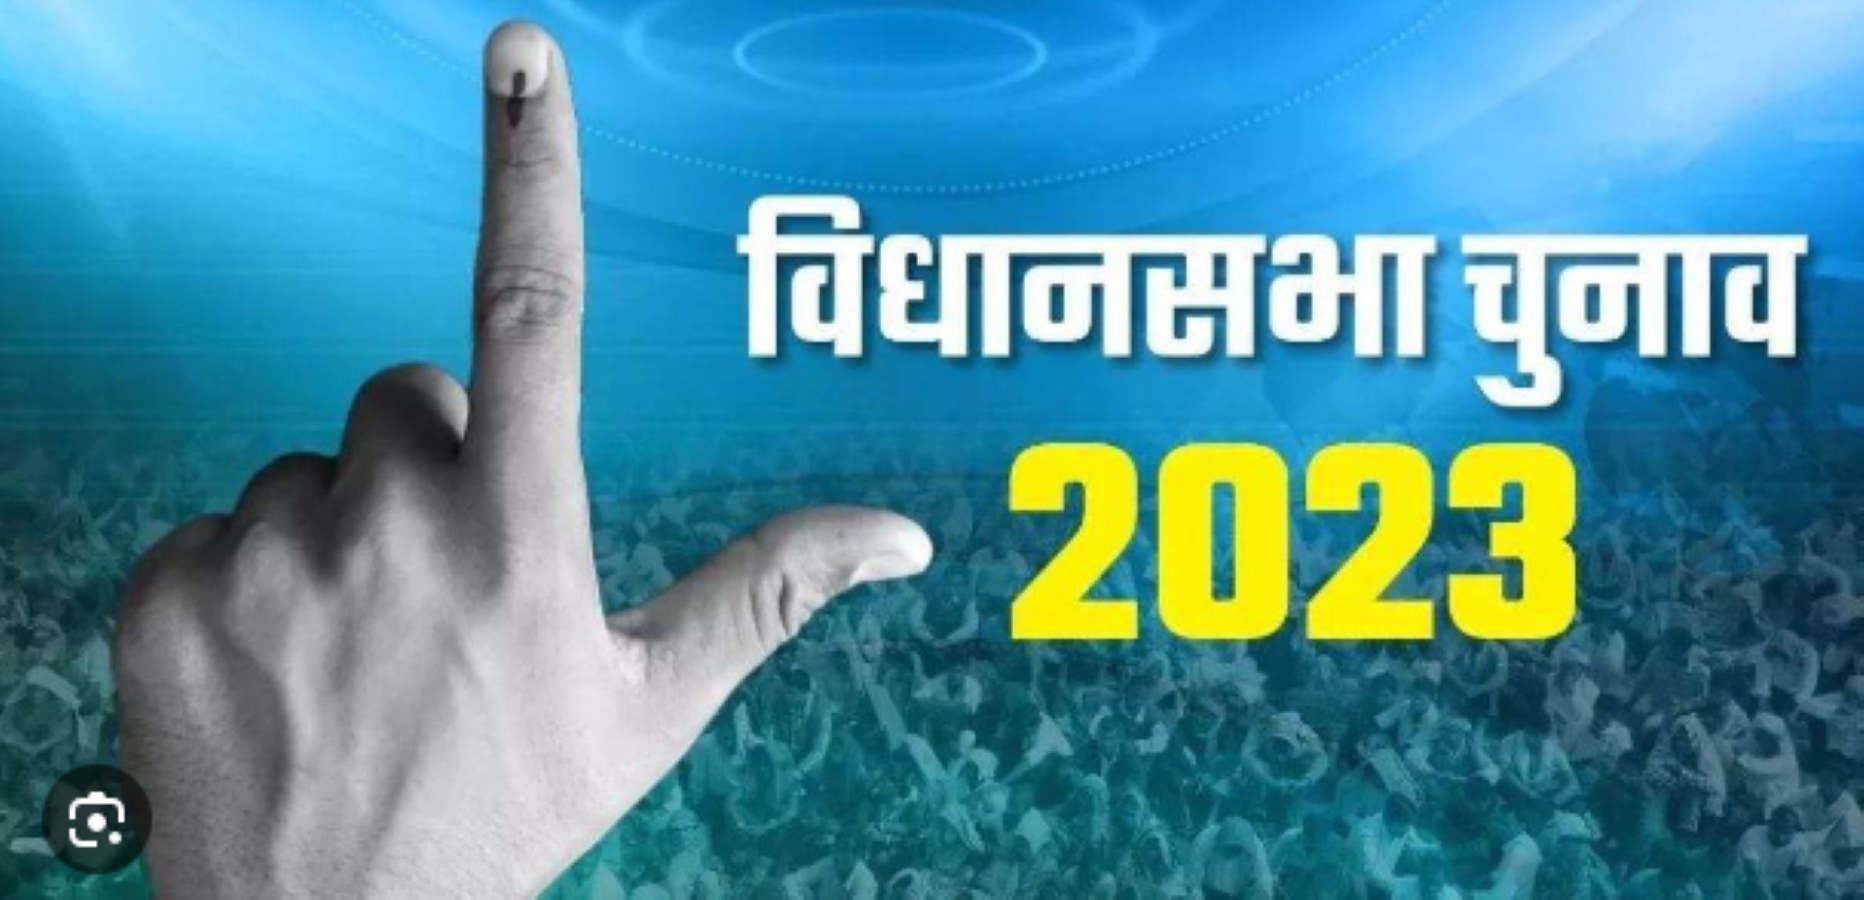 Assembly Election Results 2023 Updates: BJP ने मारी बाजी, छाया ‘भगवा’ राज